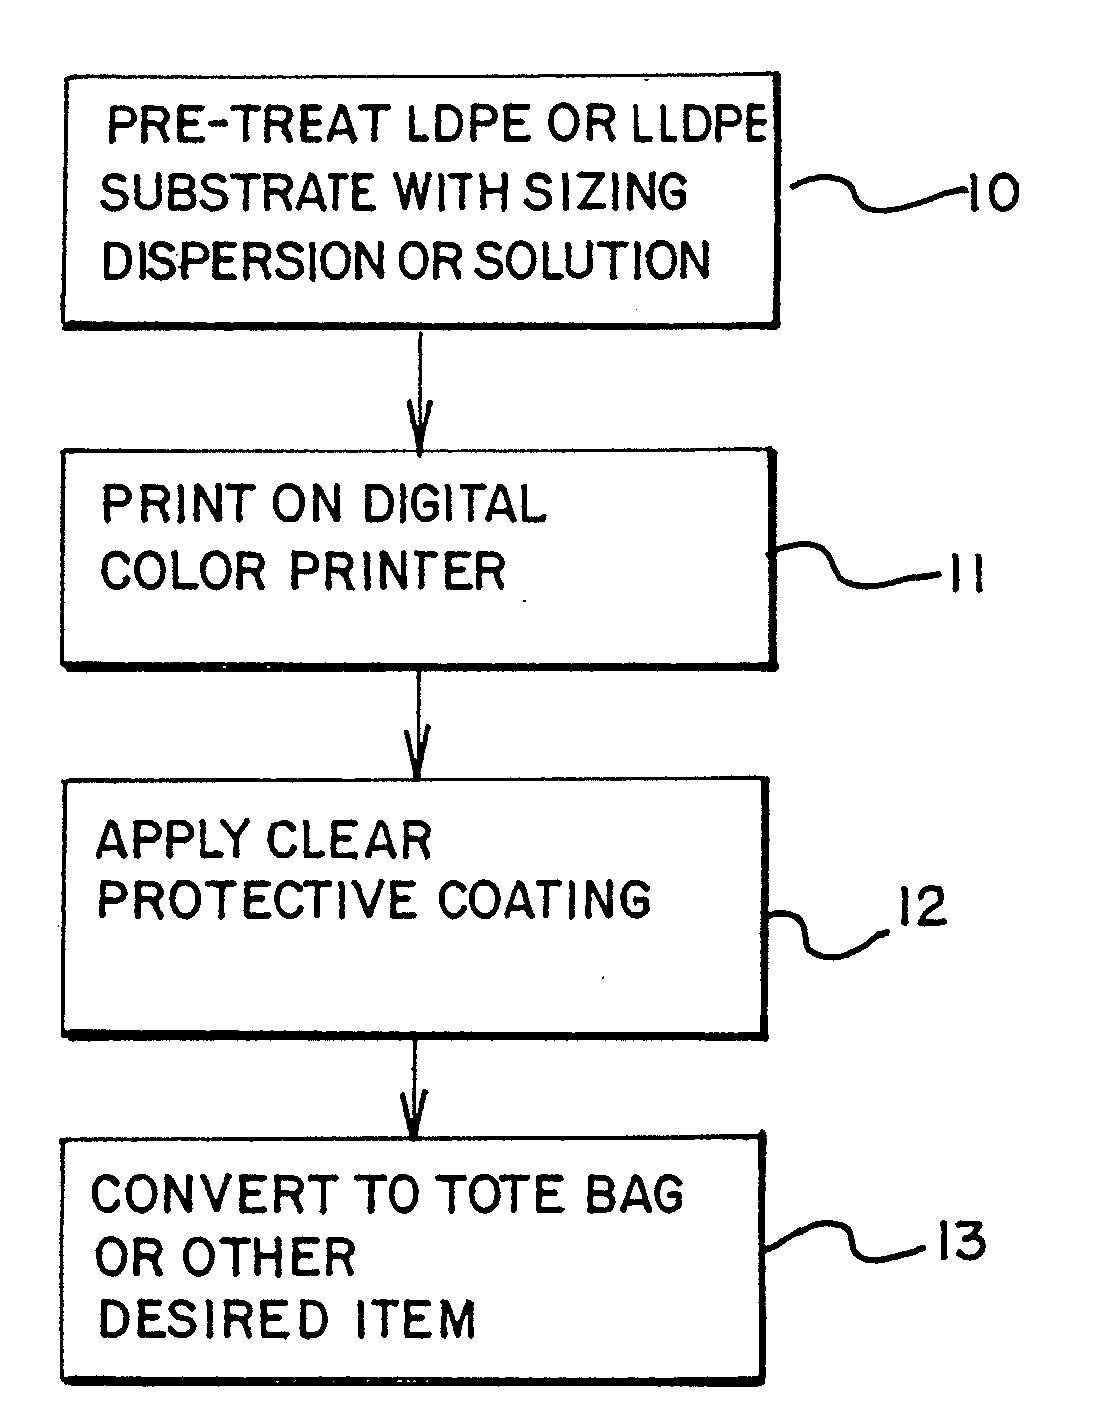 Digital Printing of Low Volume Applications